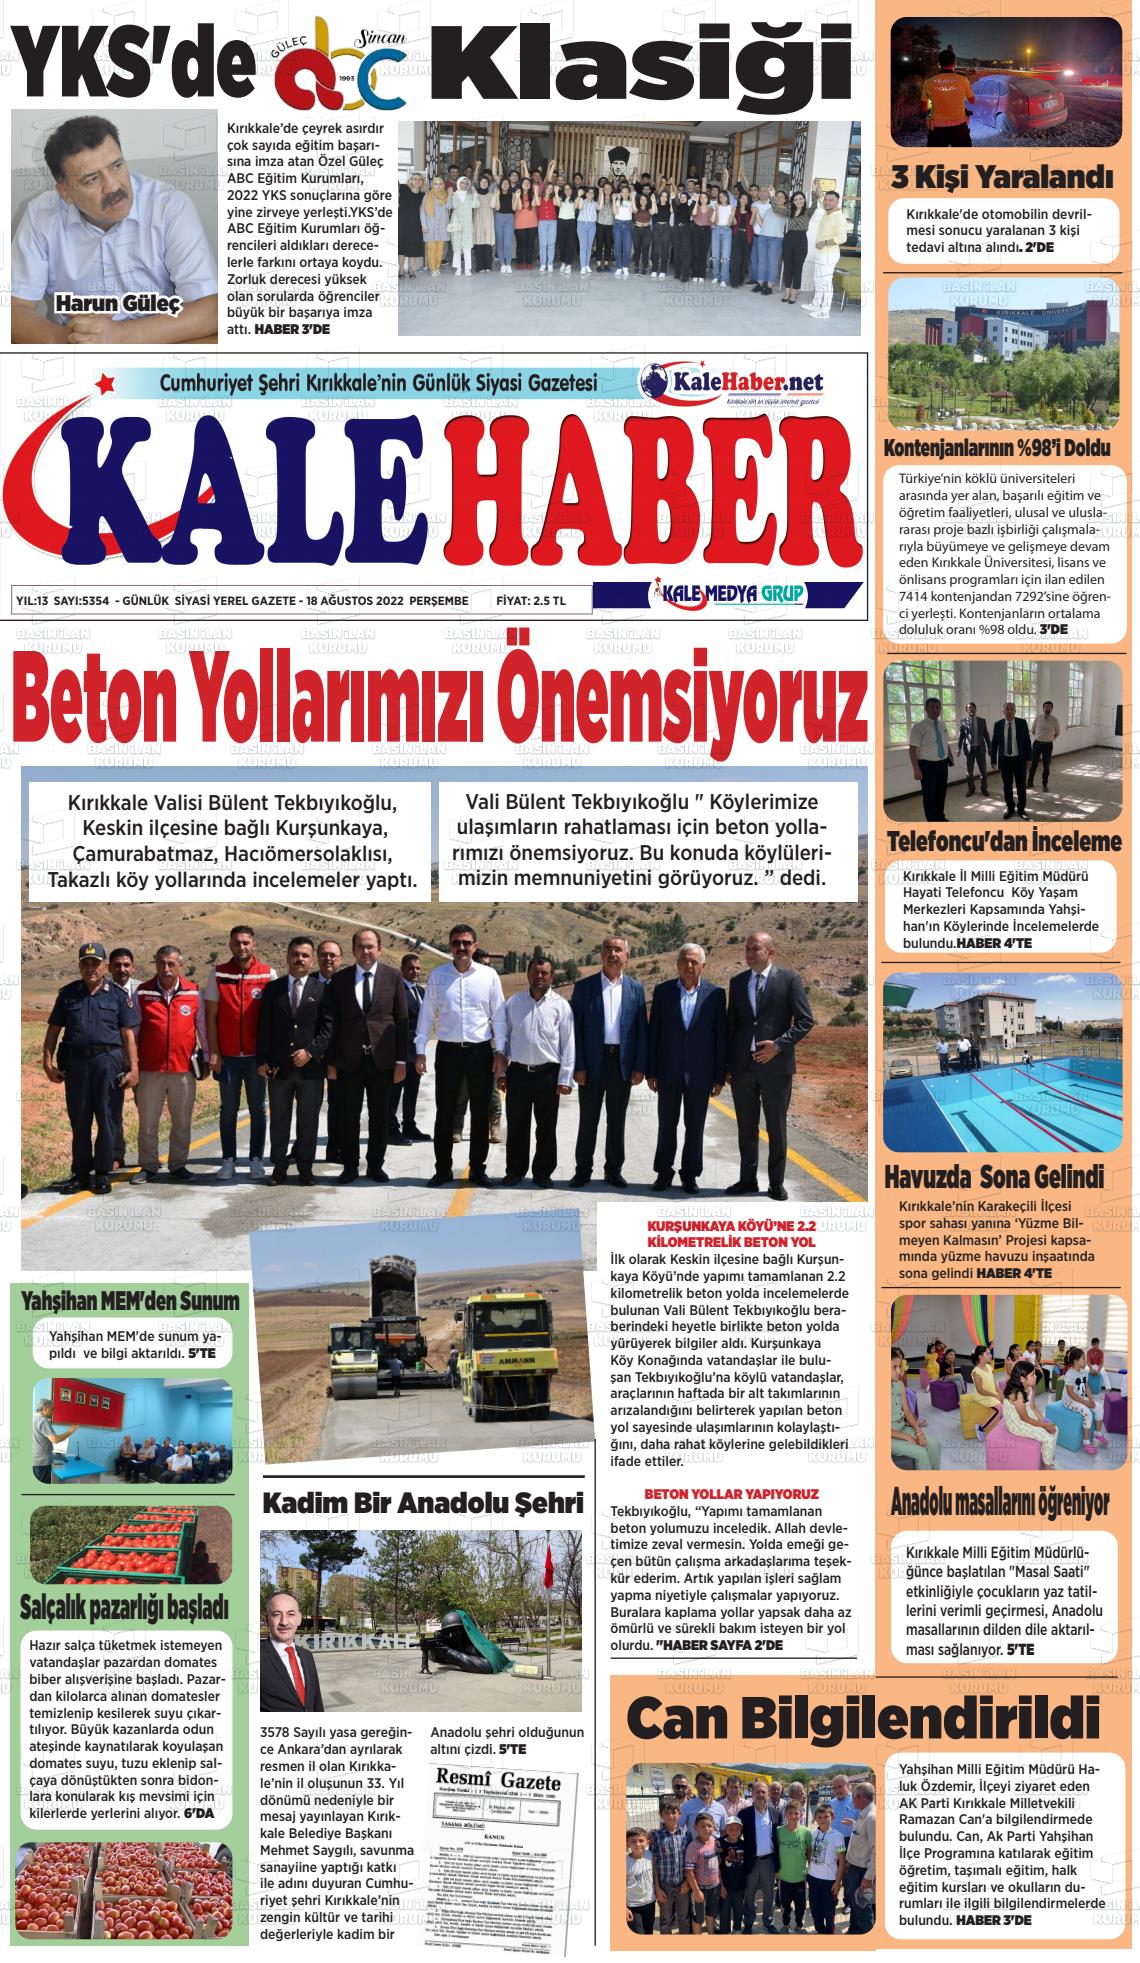 18 Ağustos 2022 Kale Haber Gazete Manşeti